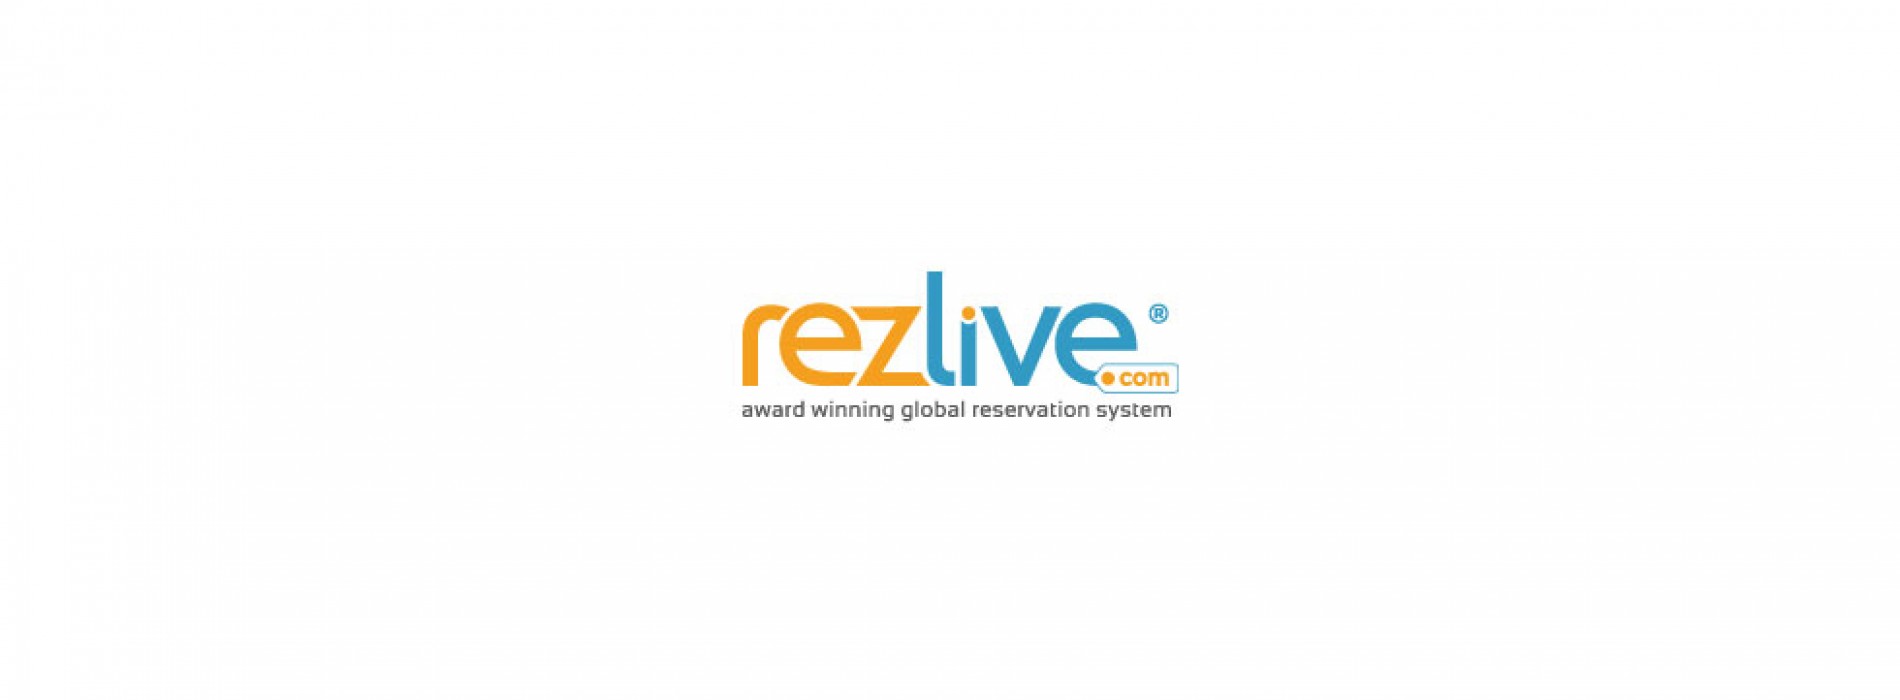 RezLive.com organized FAM Trip to Sri Lanka and Maldives